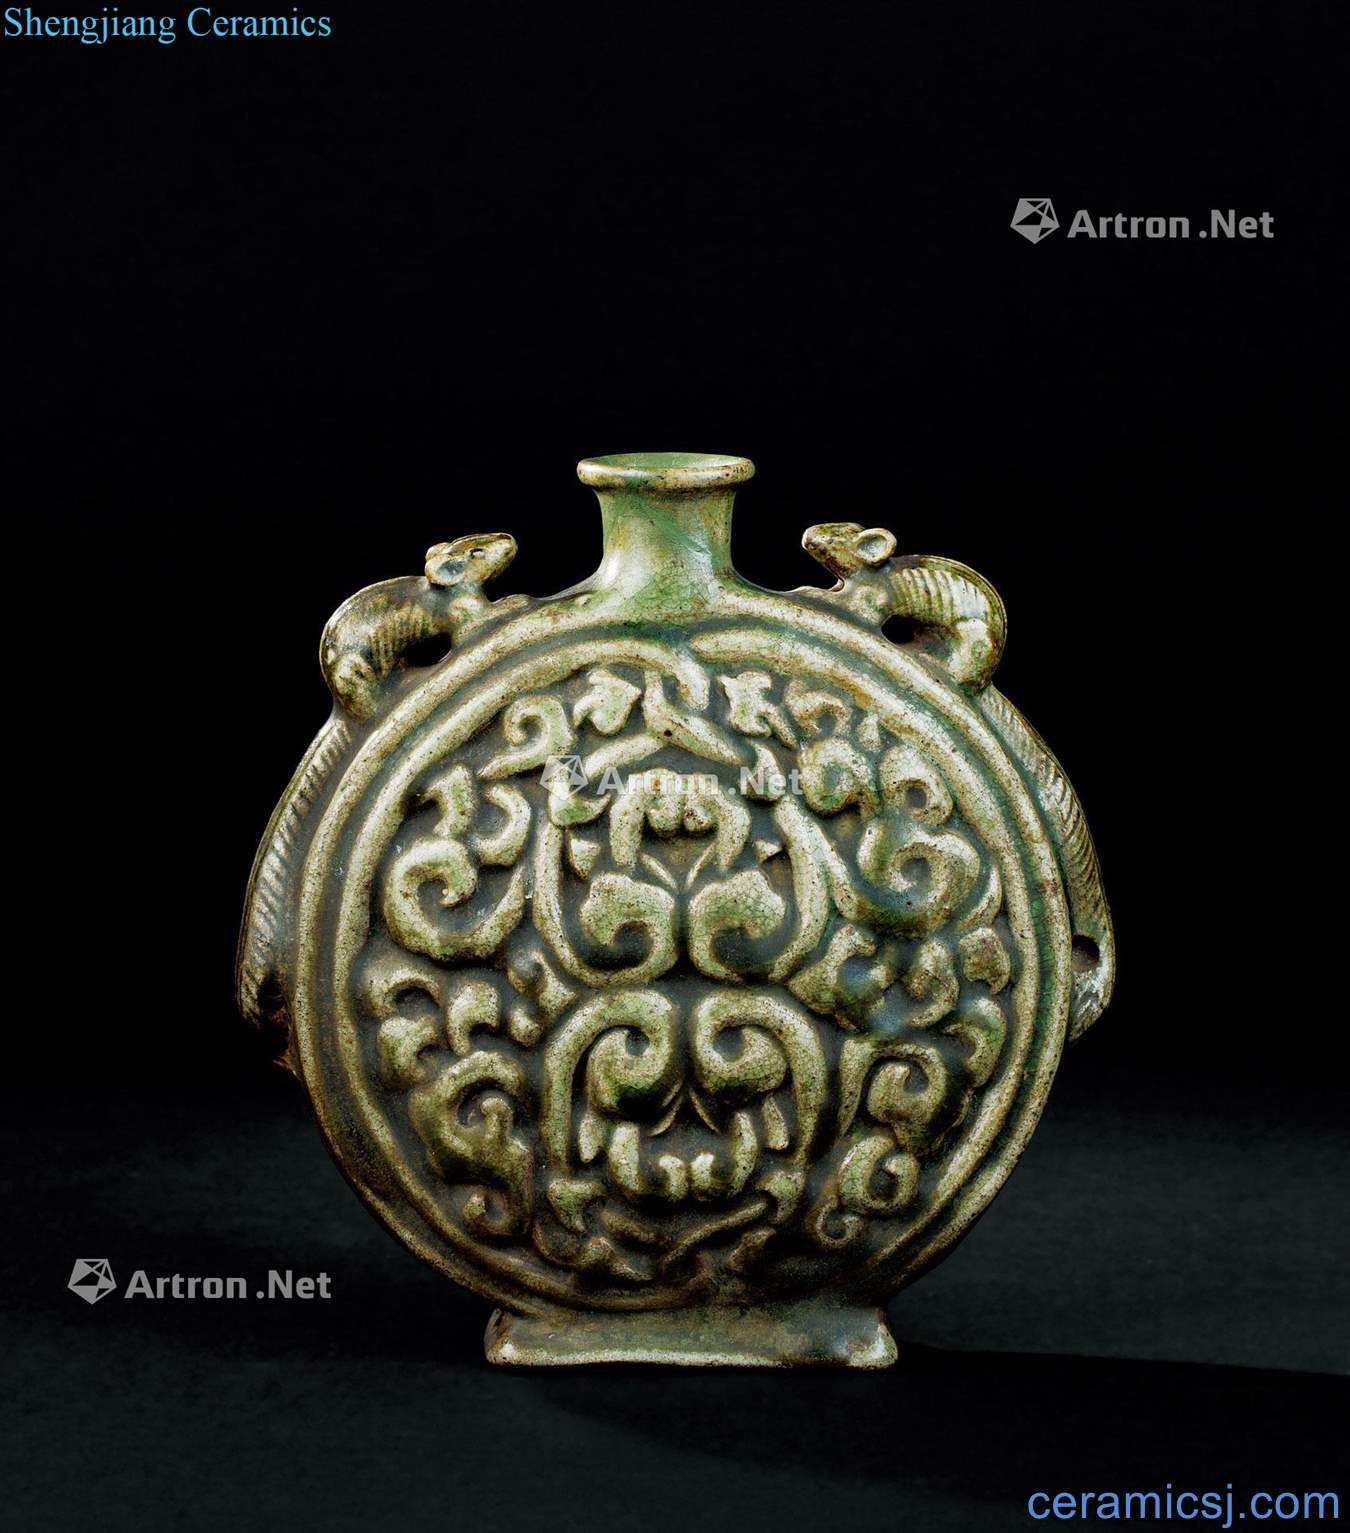 The yuan dynasty (1279-1368), celadon chipmunk ears flat pot